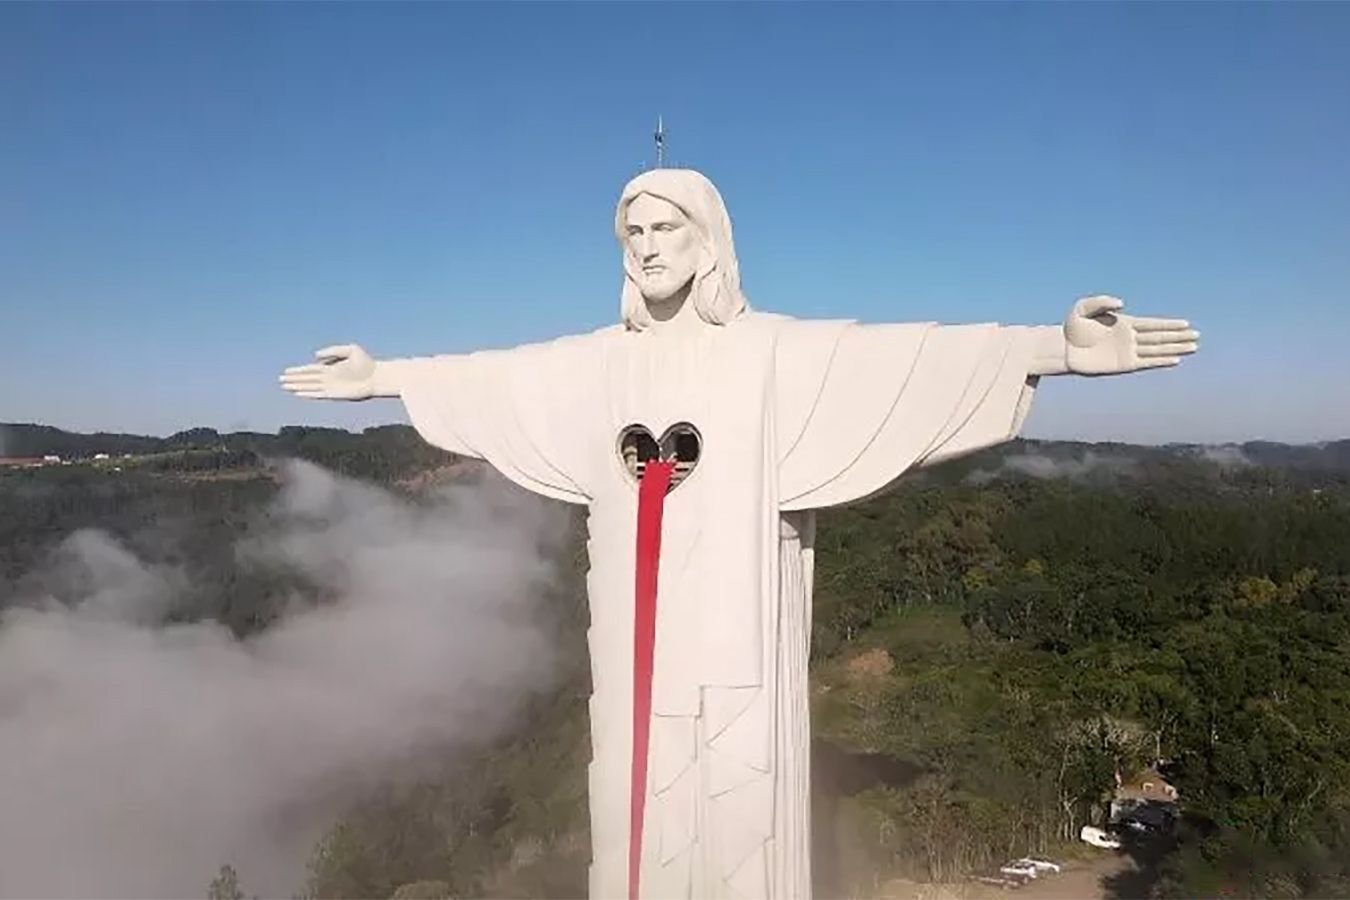 статуя христа в доминикане